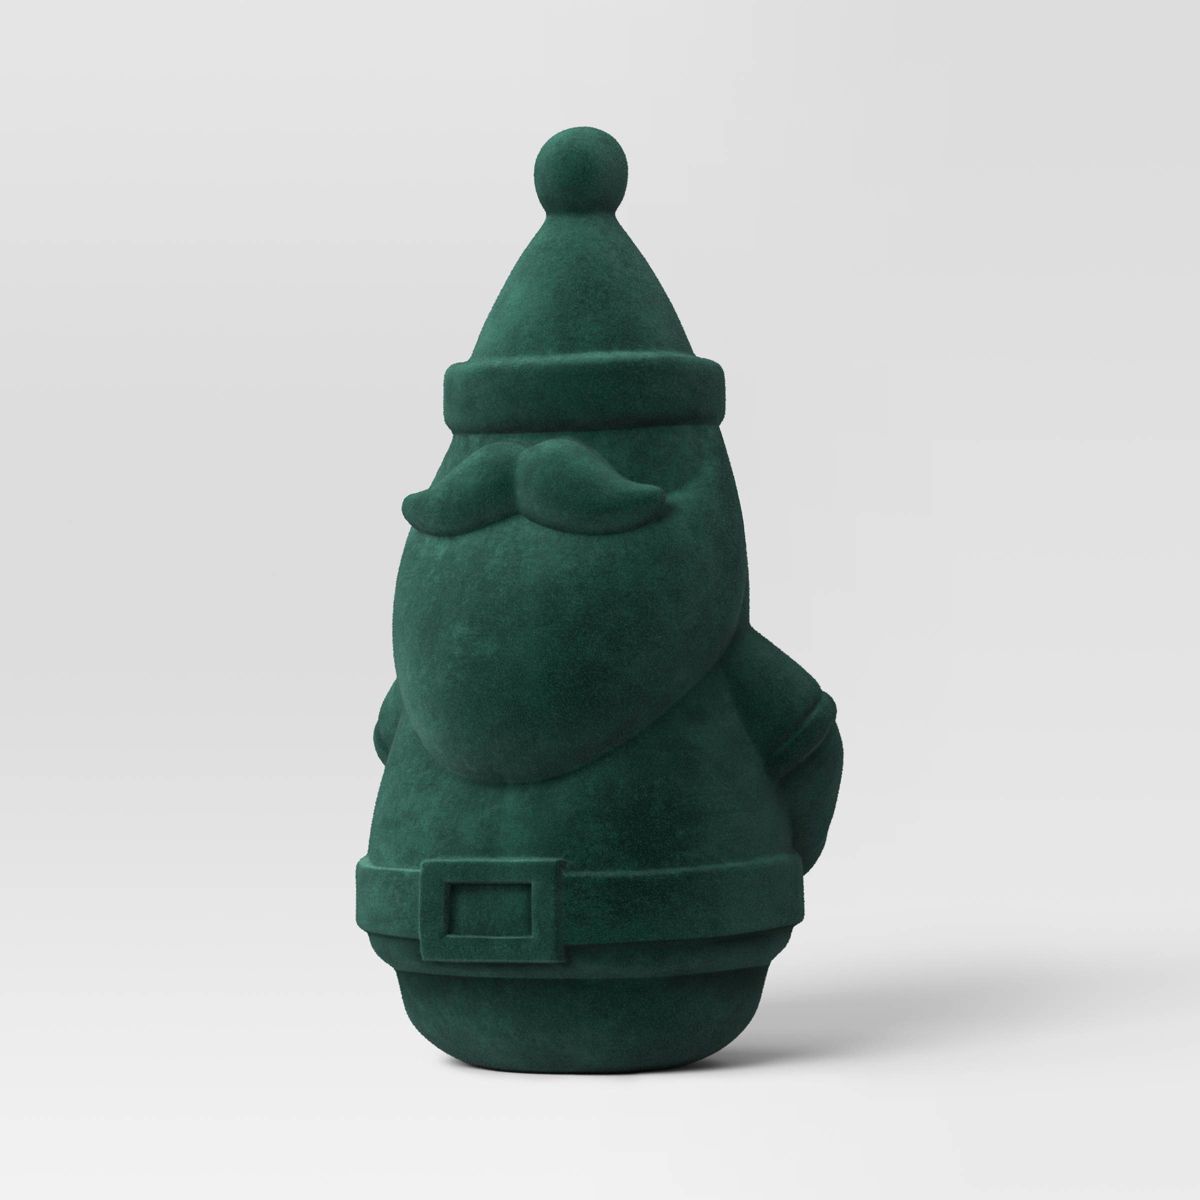 9" Flocked Santa Christmas Figurine - Wondershop™ | Target